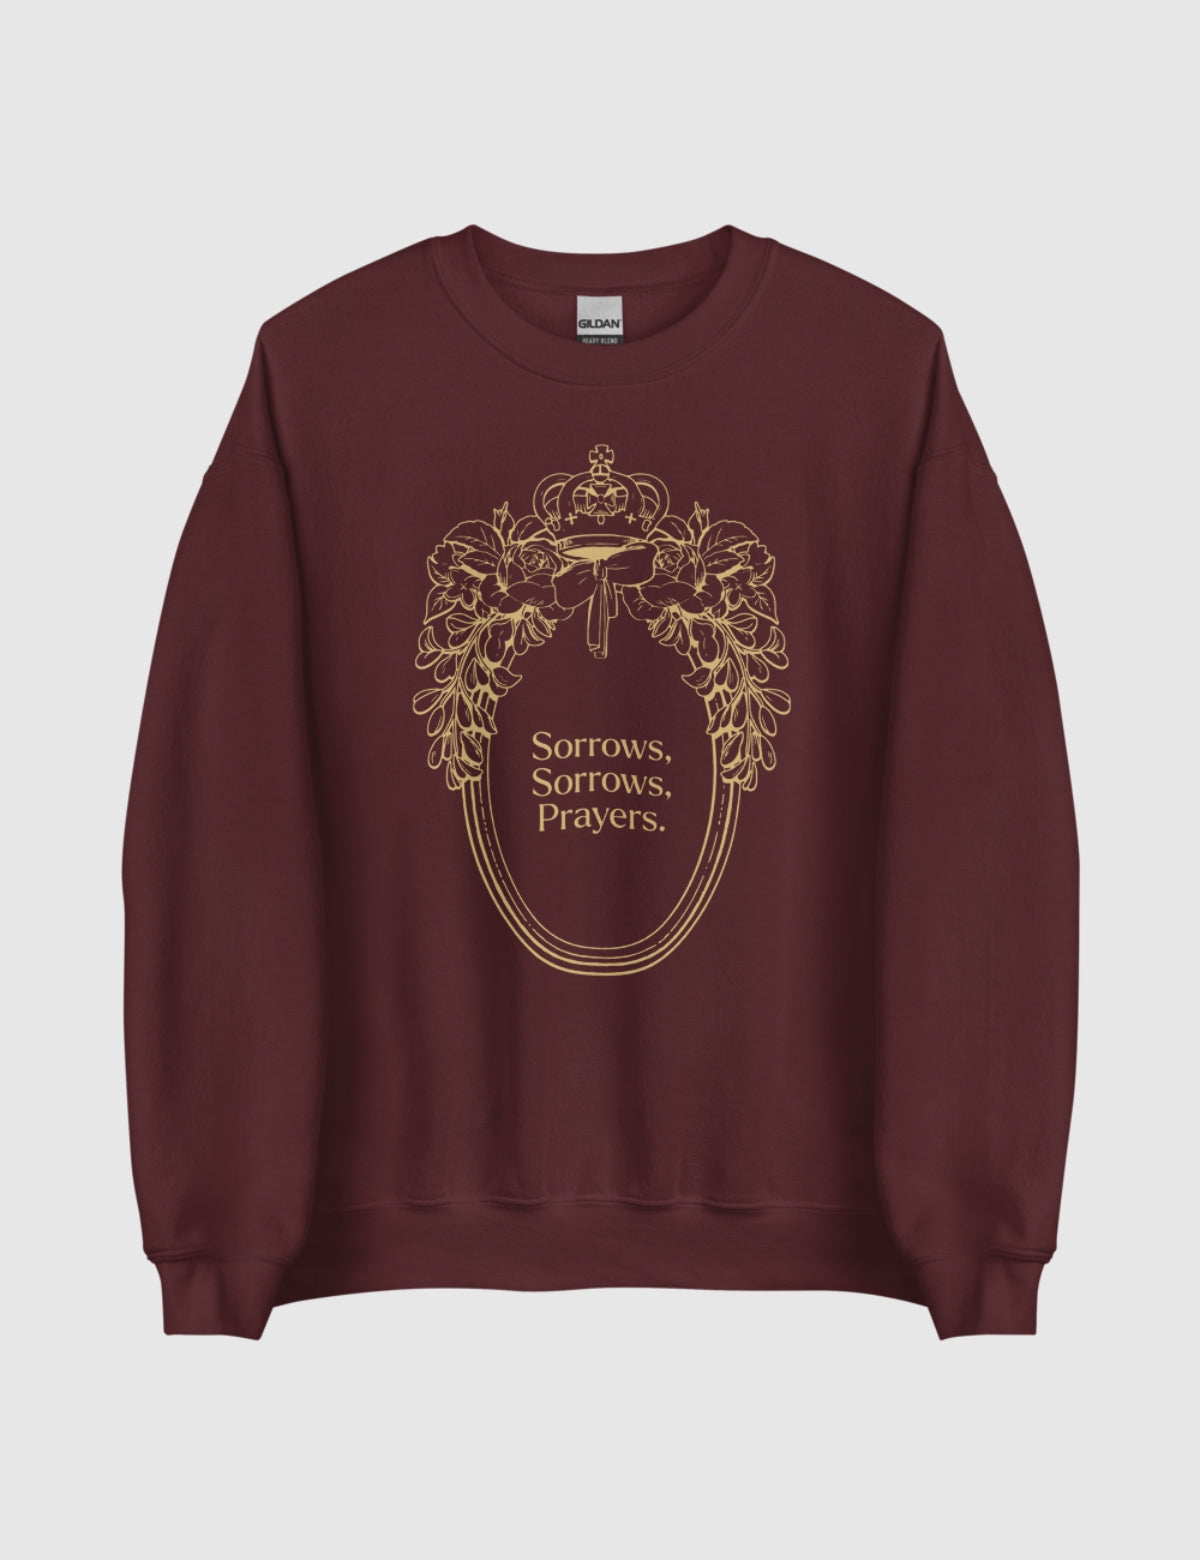 Queen Charlotte 'Sorrows Sorrows Prayers' Unisex Sweatshirt [Maroon]